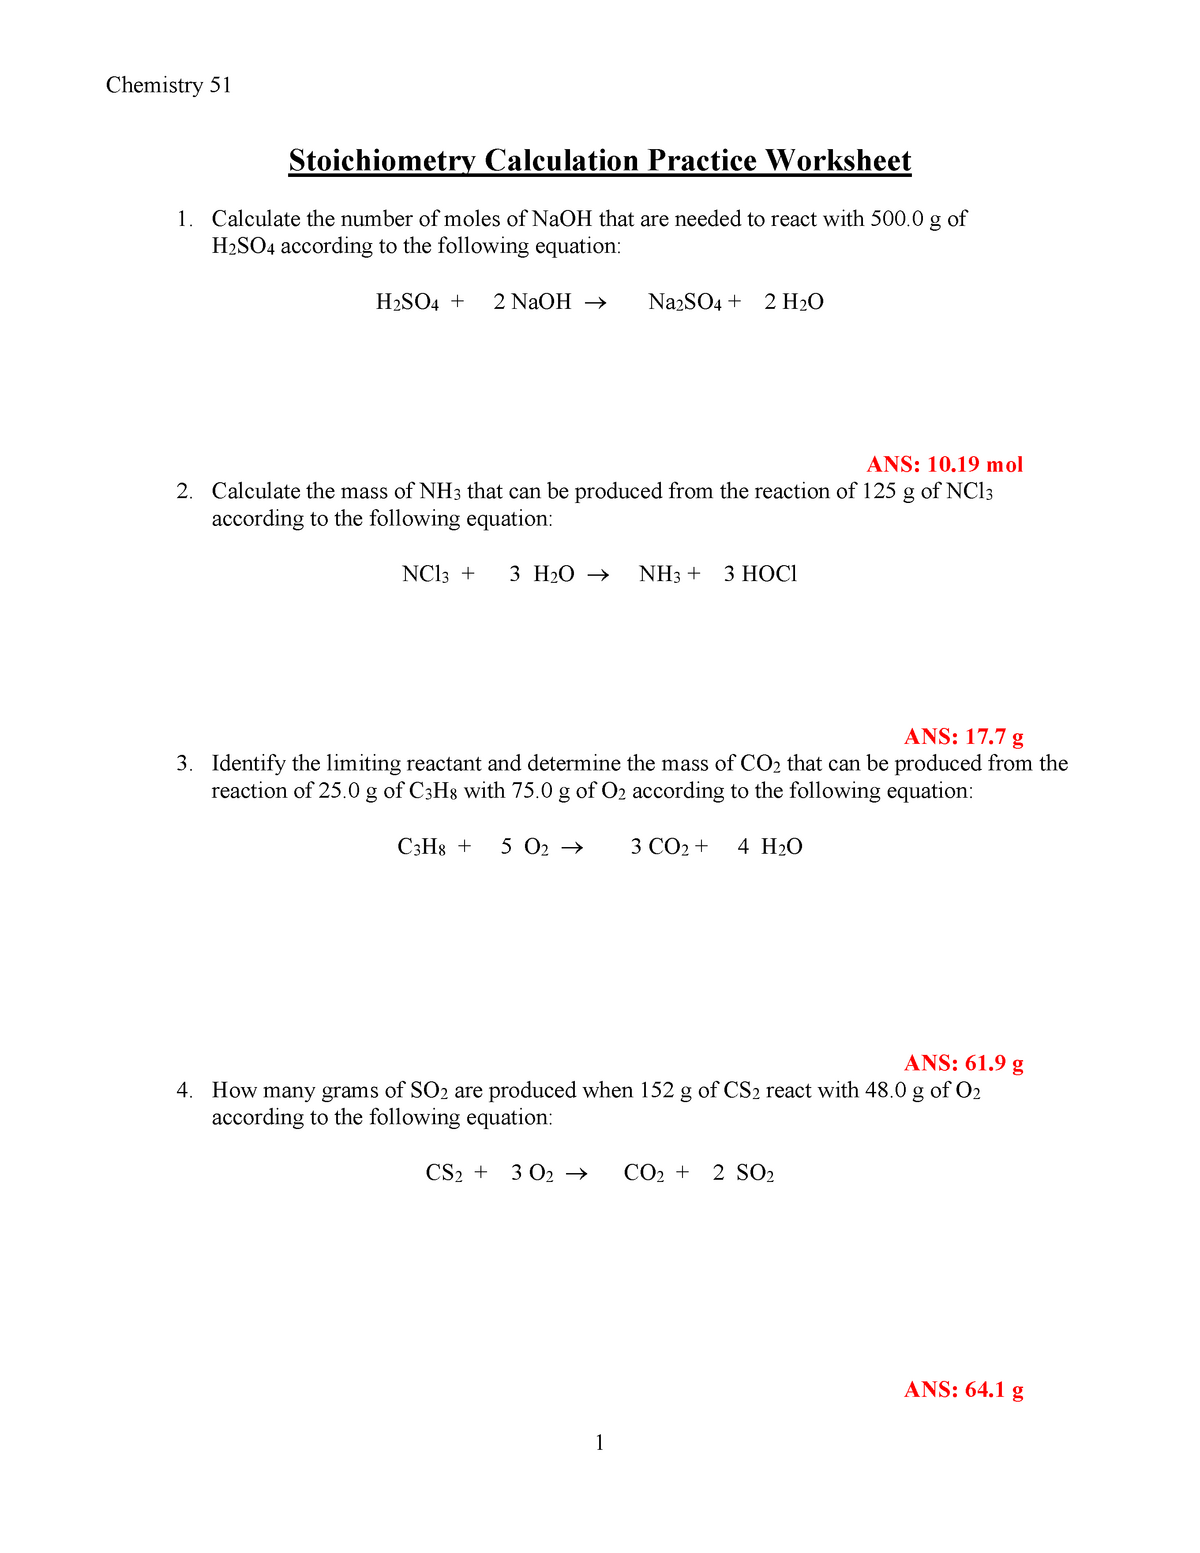 Stoichiometry Worksheet - Chemistry 22 22 Stoichiometry Calculation Intended For Stoichiometry Worksheet Answer Key